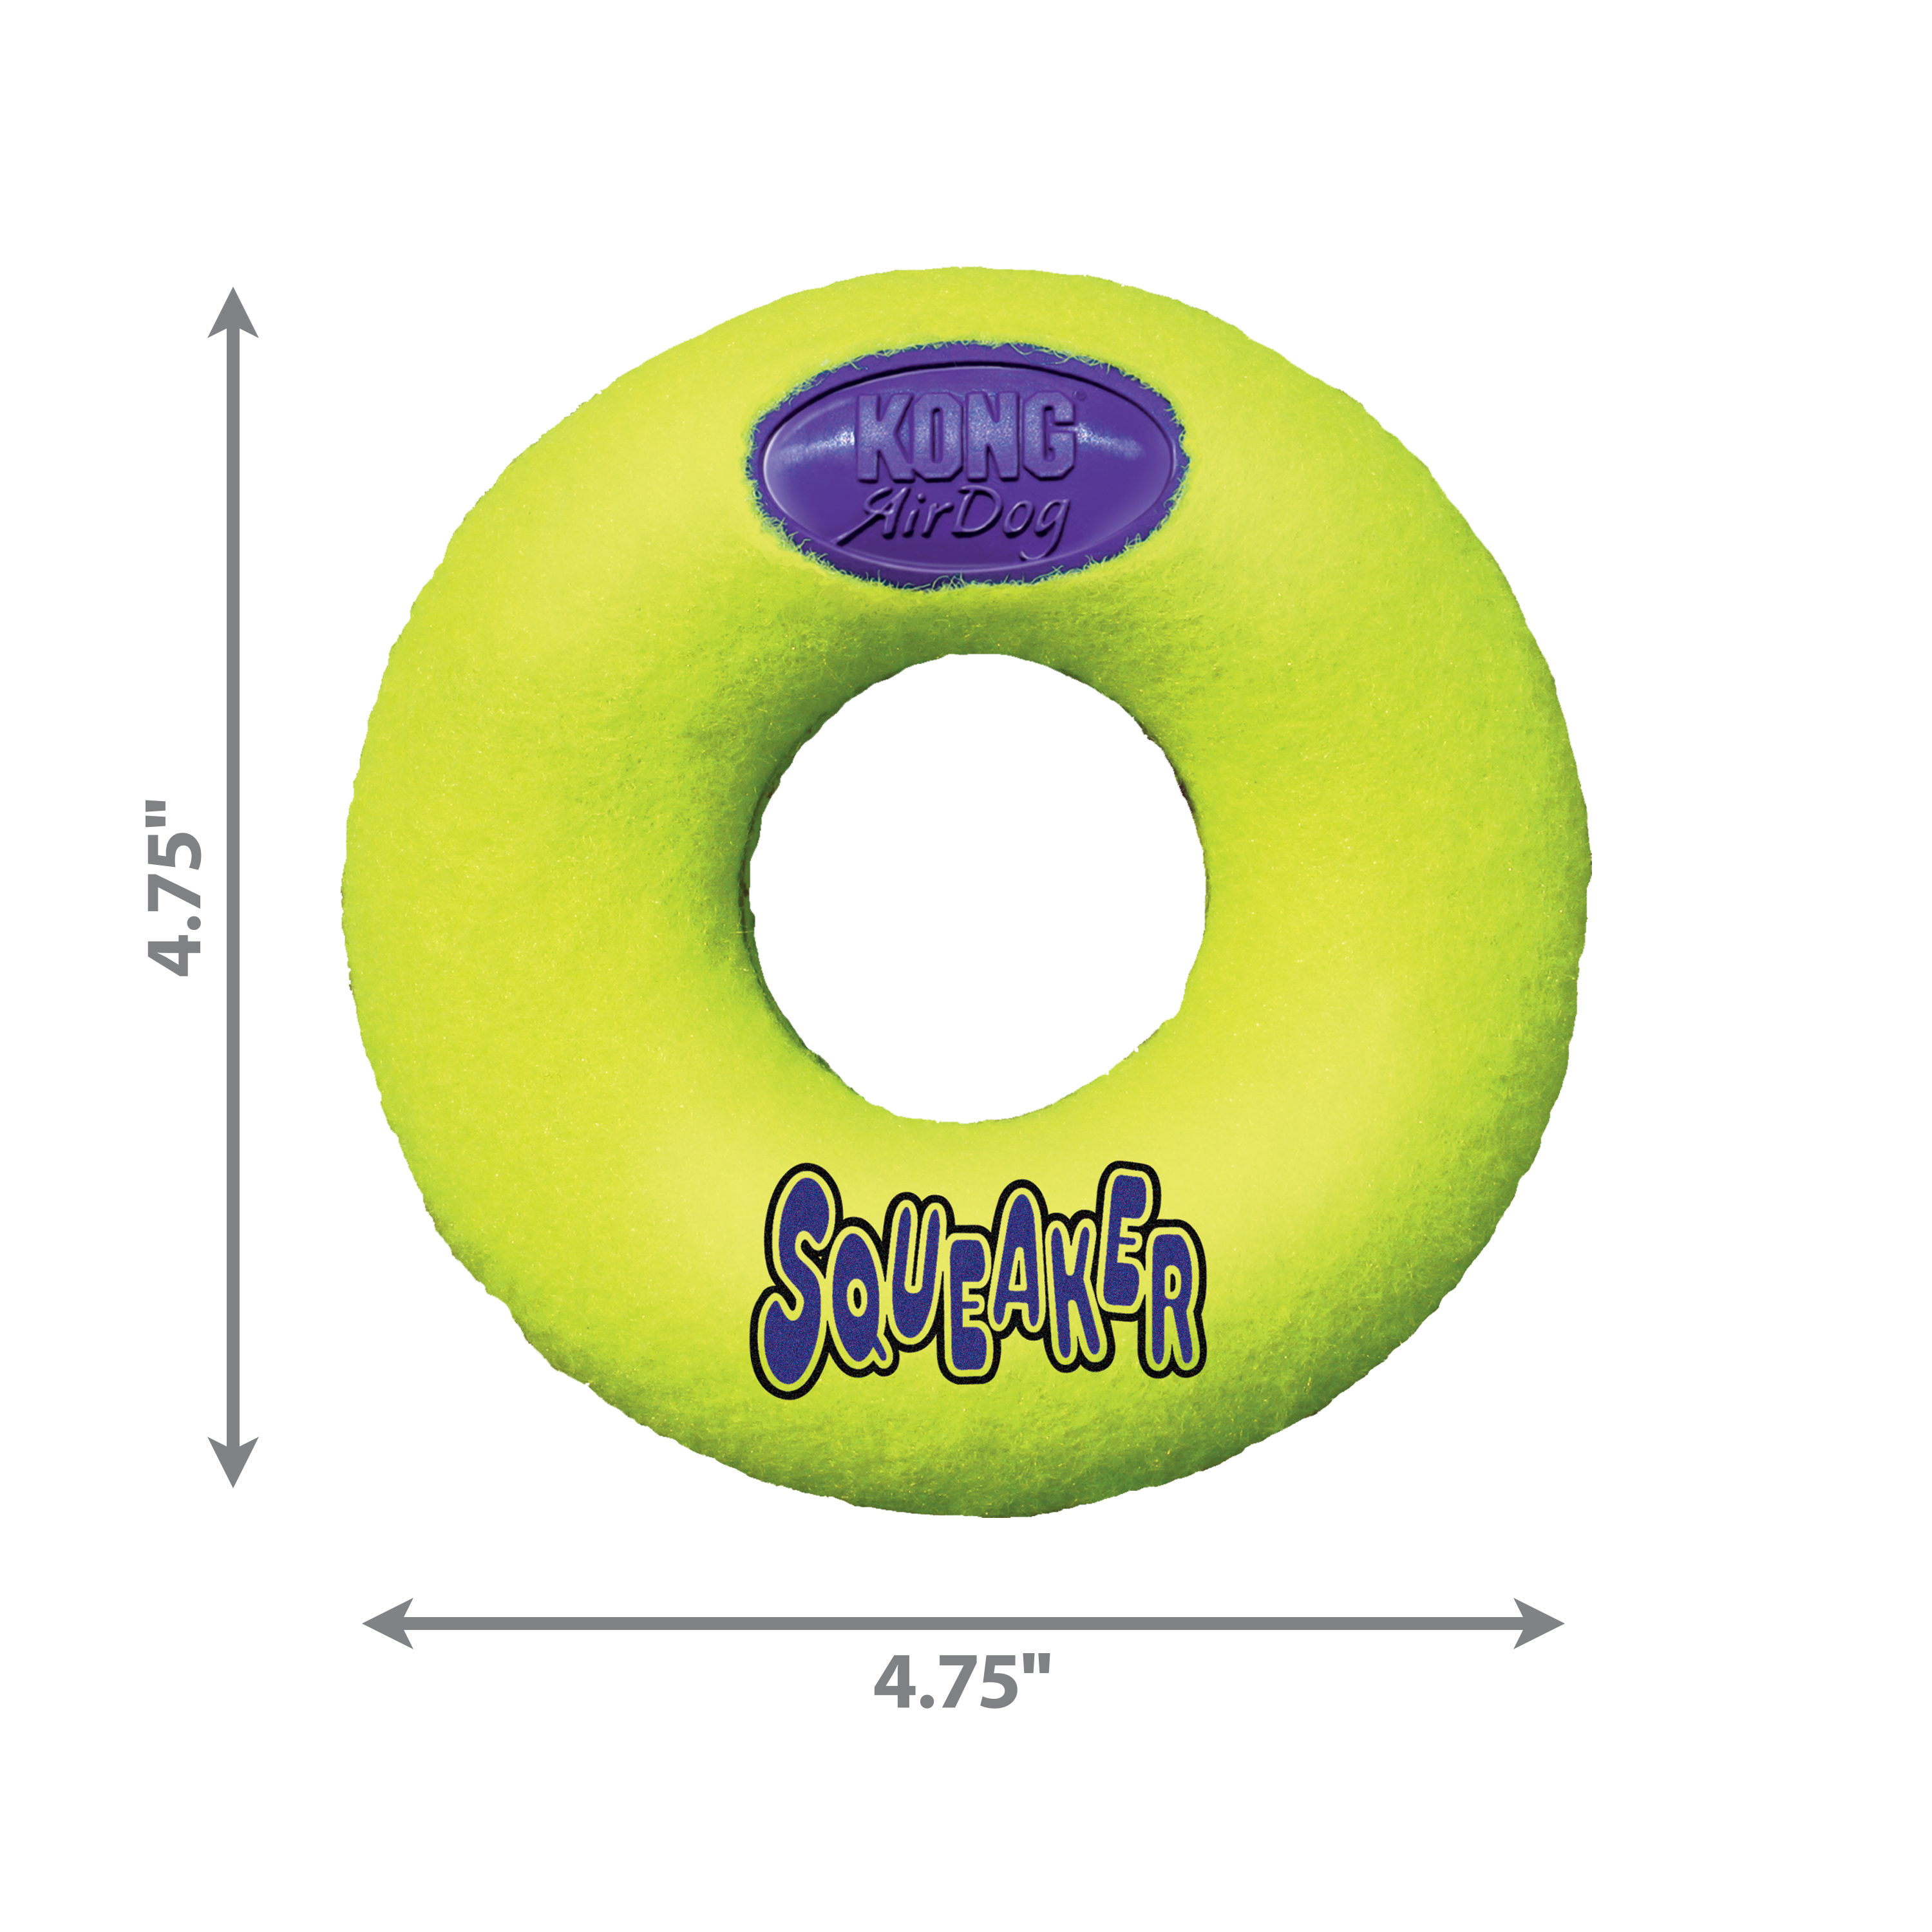 AirDog Donut dimoffpack image du produit